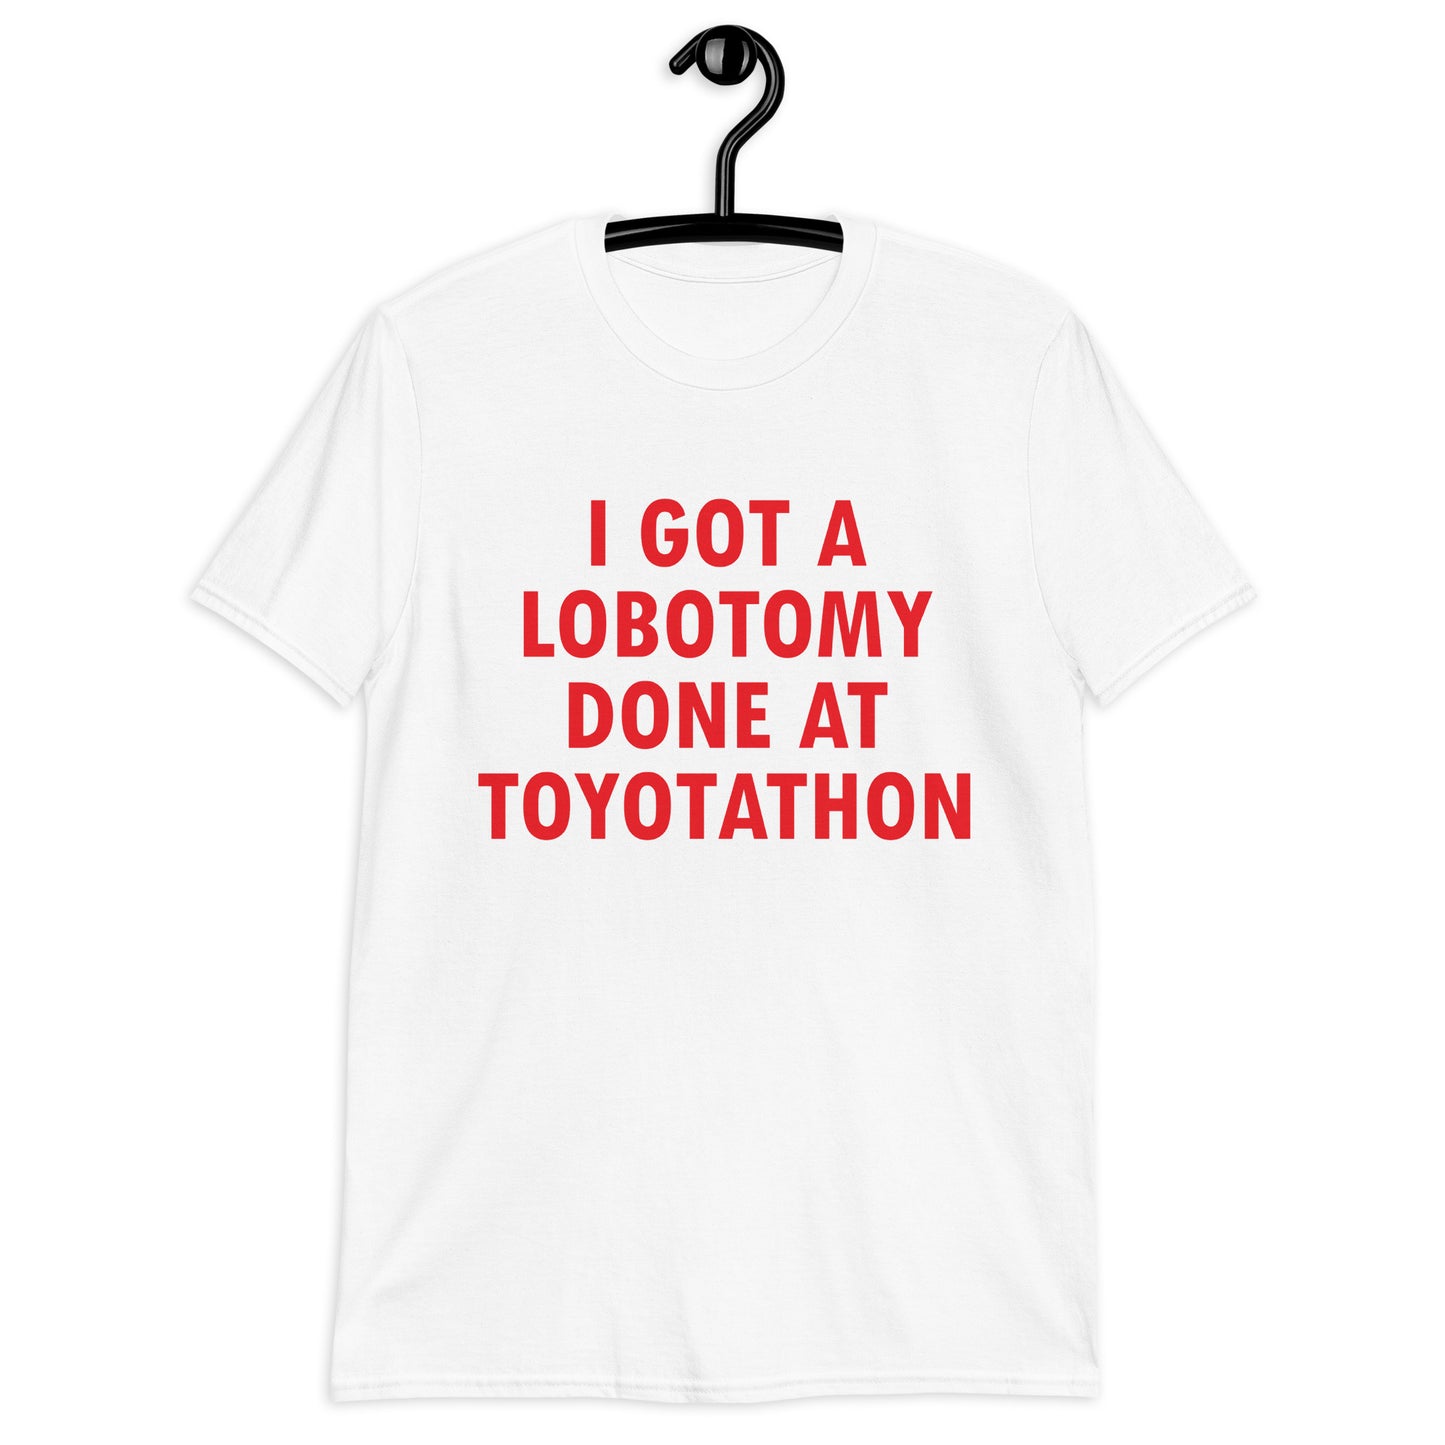 I GOT A LOBOTOMY DONE AT TOYOTATHON Short-Sleeve Unisex T-Shirt